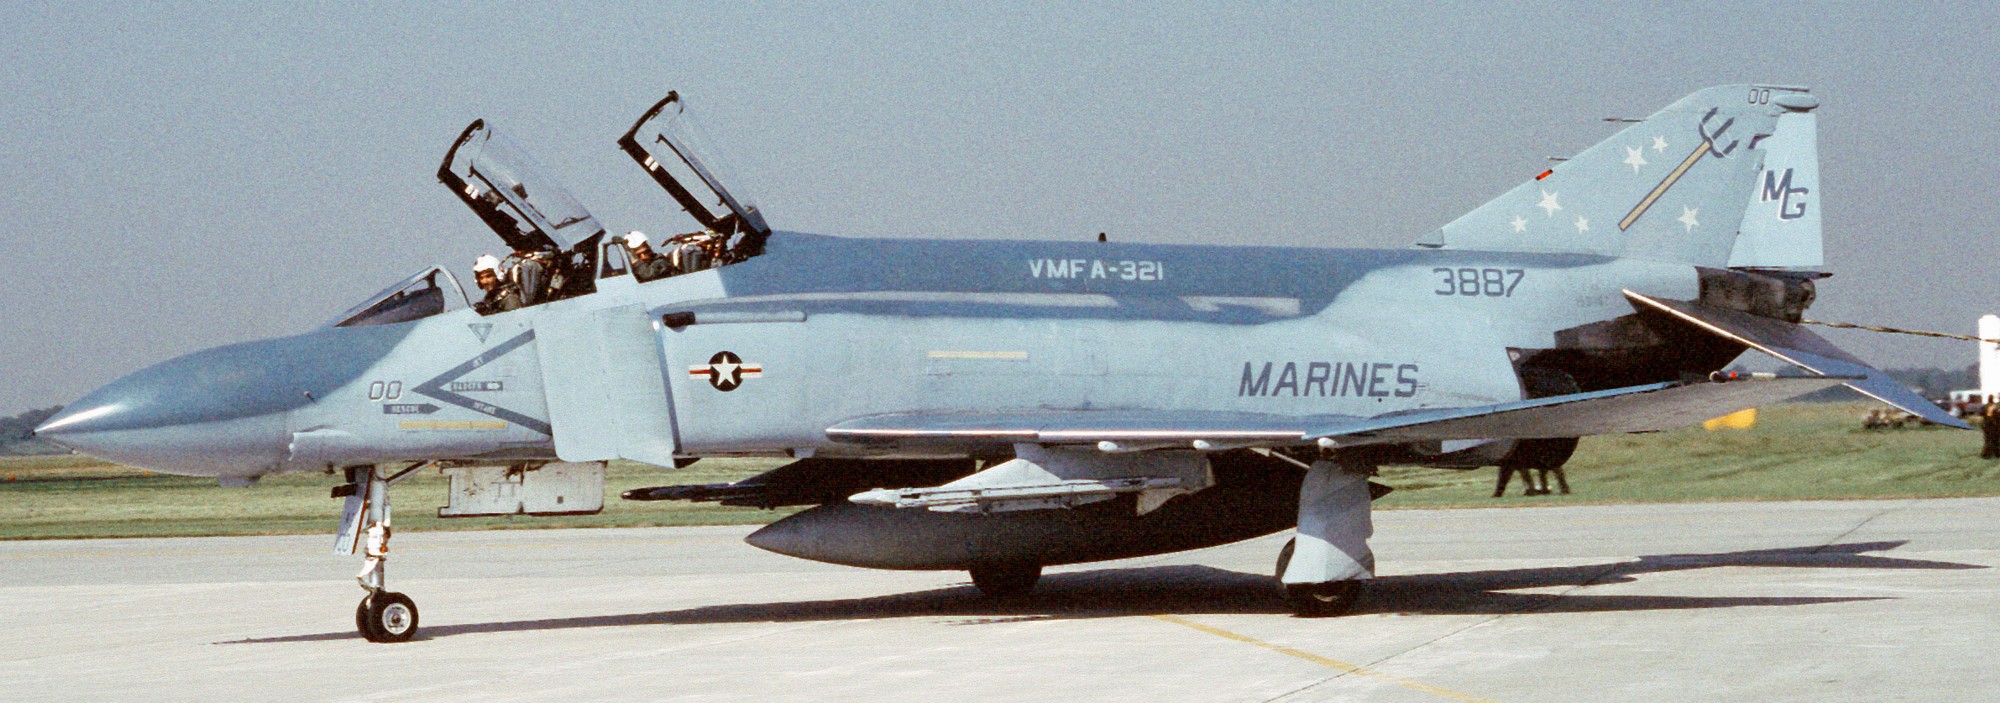 vmfa-321 hell's angels marine fighter attack squadron usmc f-4s phantom ii 08